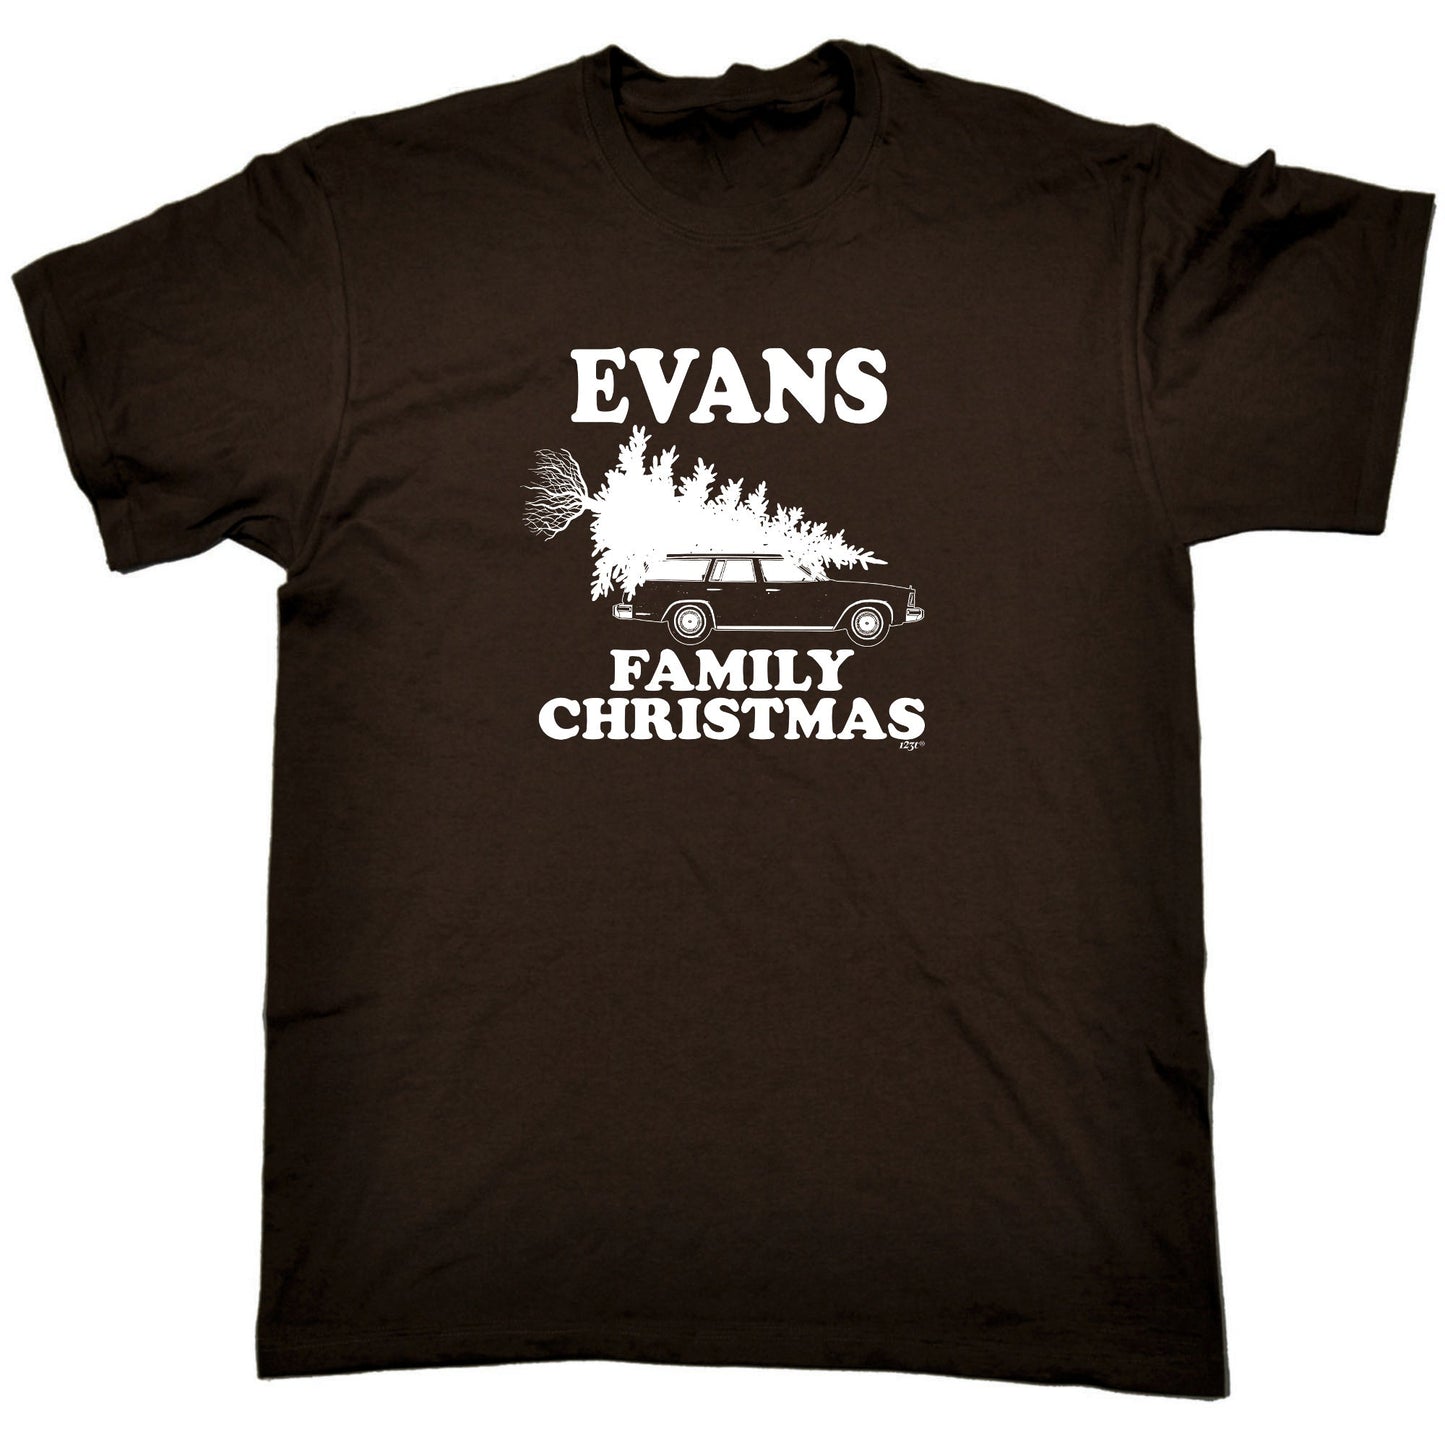 Family Christmas Evans - Mens Xmas Novelty T-Shirt / T Shirt